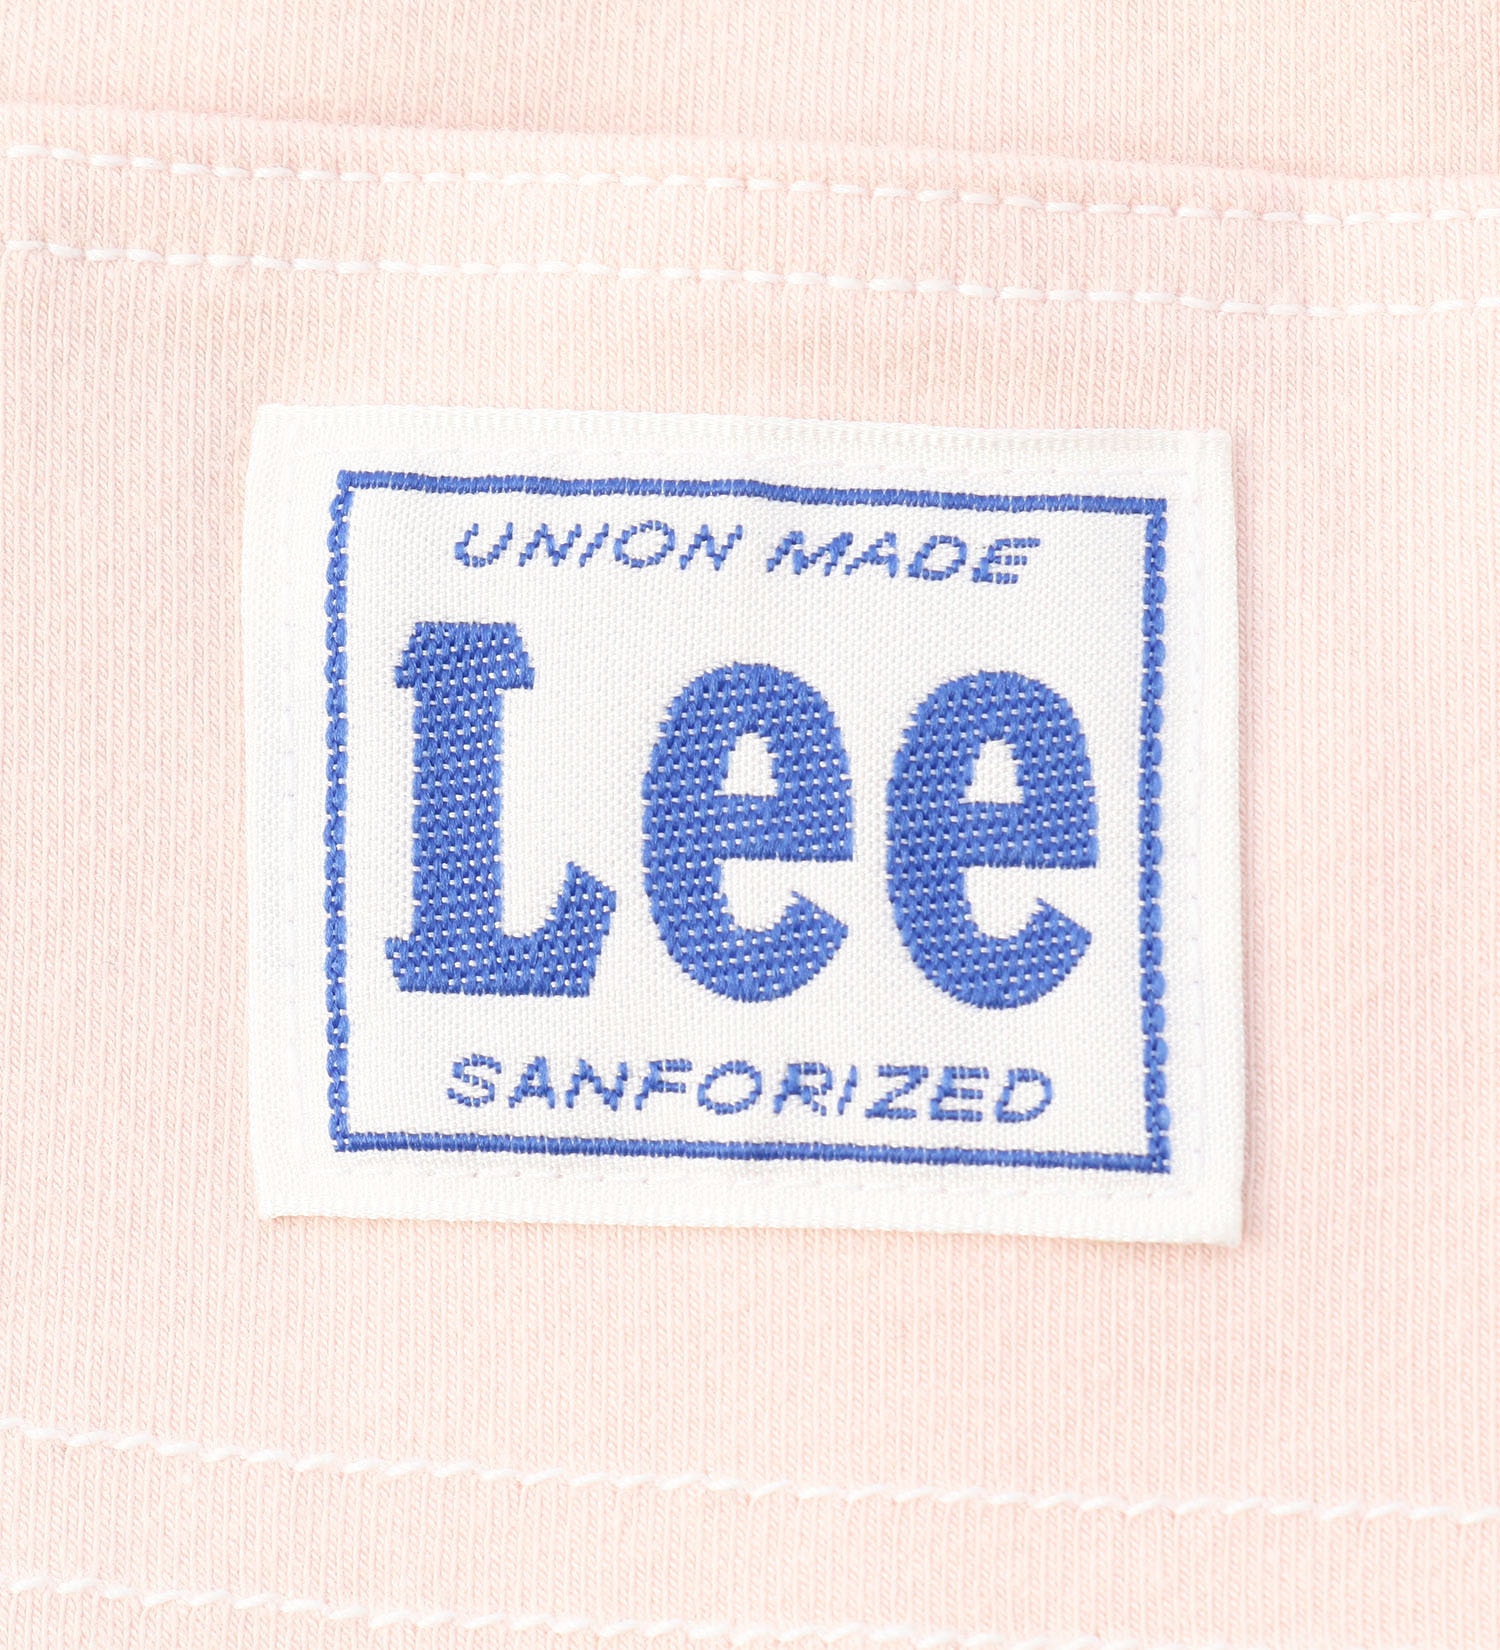 Lee(リー)の【70-100cm】ベビー 柔らかい穿き心地のレギンス|パンツ/パンツ/キッズ|ピンク